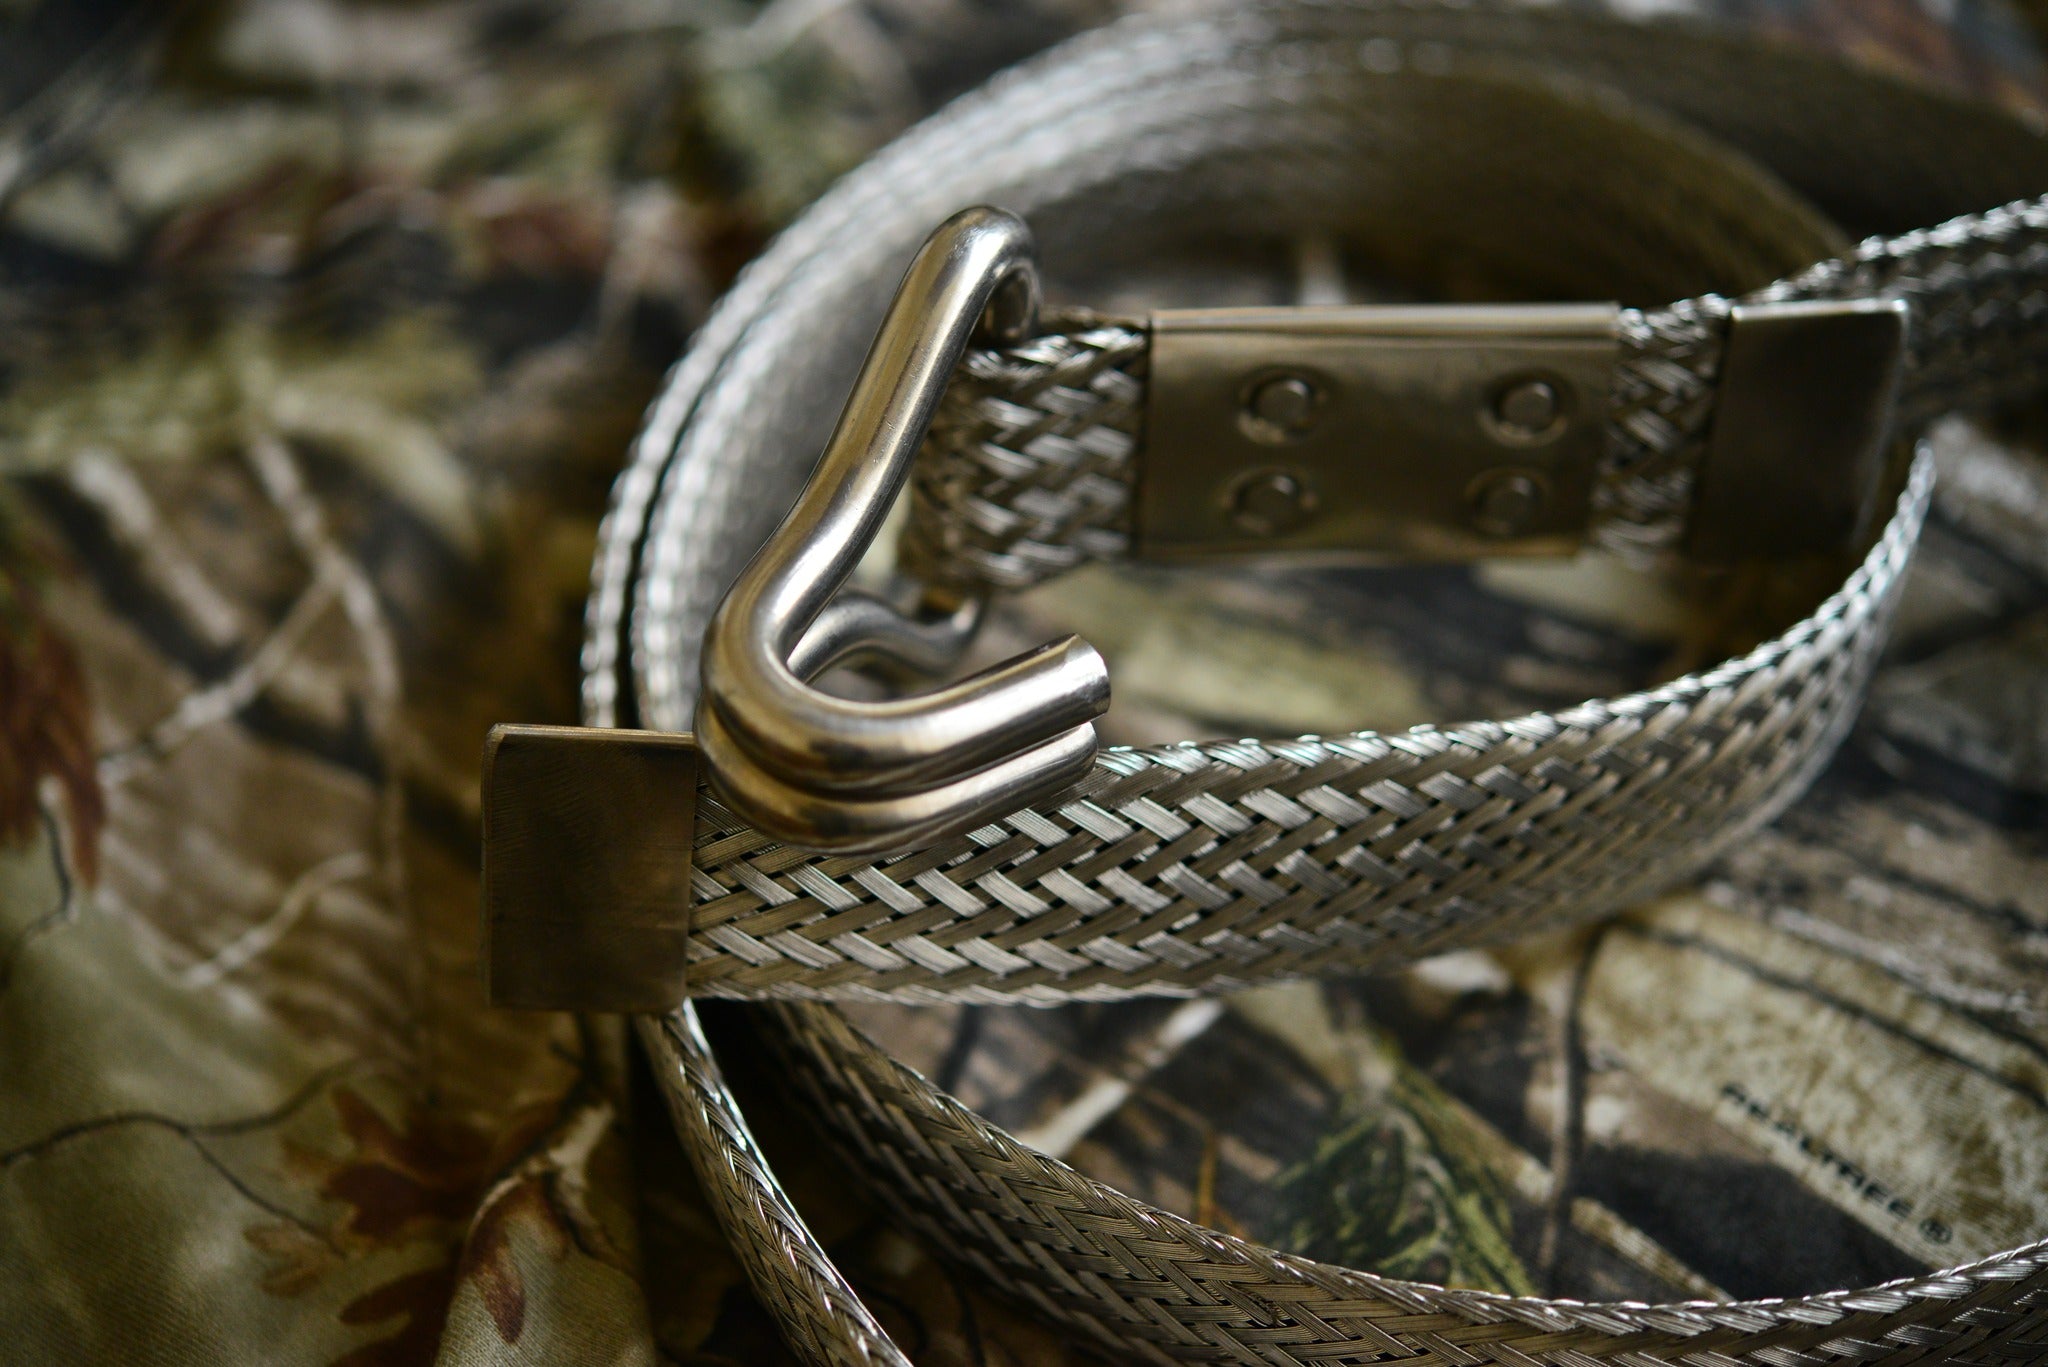 GOL-Strap 1 inch x 8 feet metal ratchet strap (Single Pack for Hunting –  Gol Strap